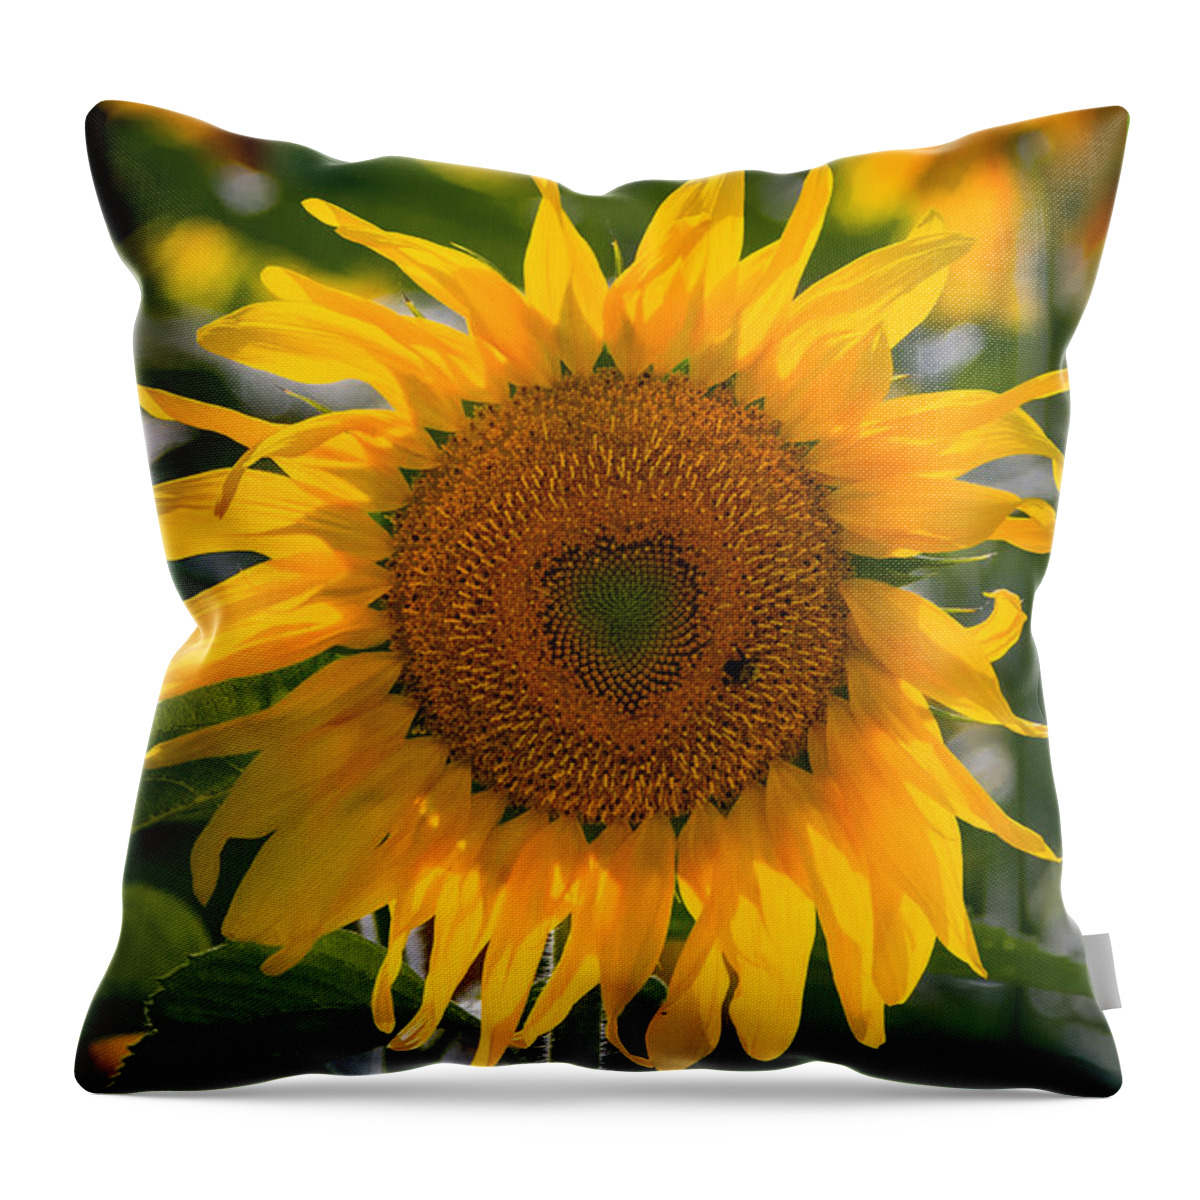 Heart Throw Pillow featuring the photograph I Heart Sunflowers by Linda Bonaccorsi